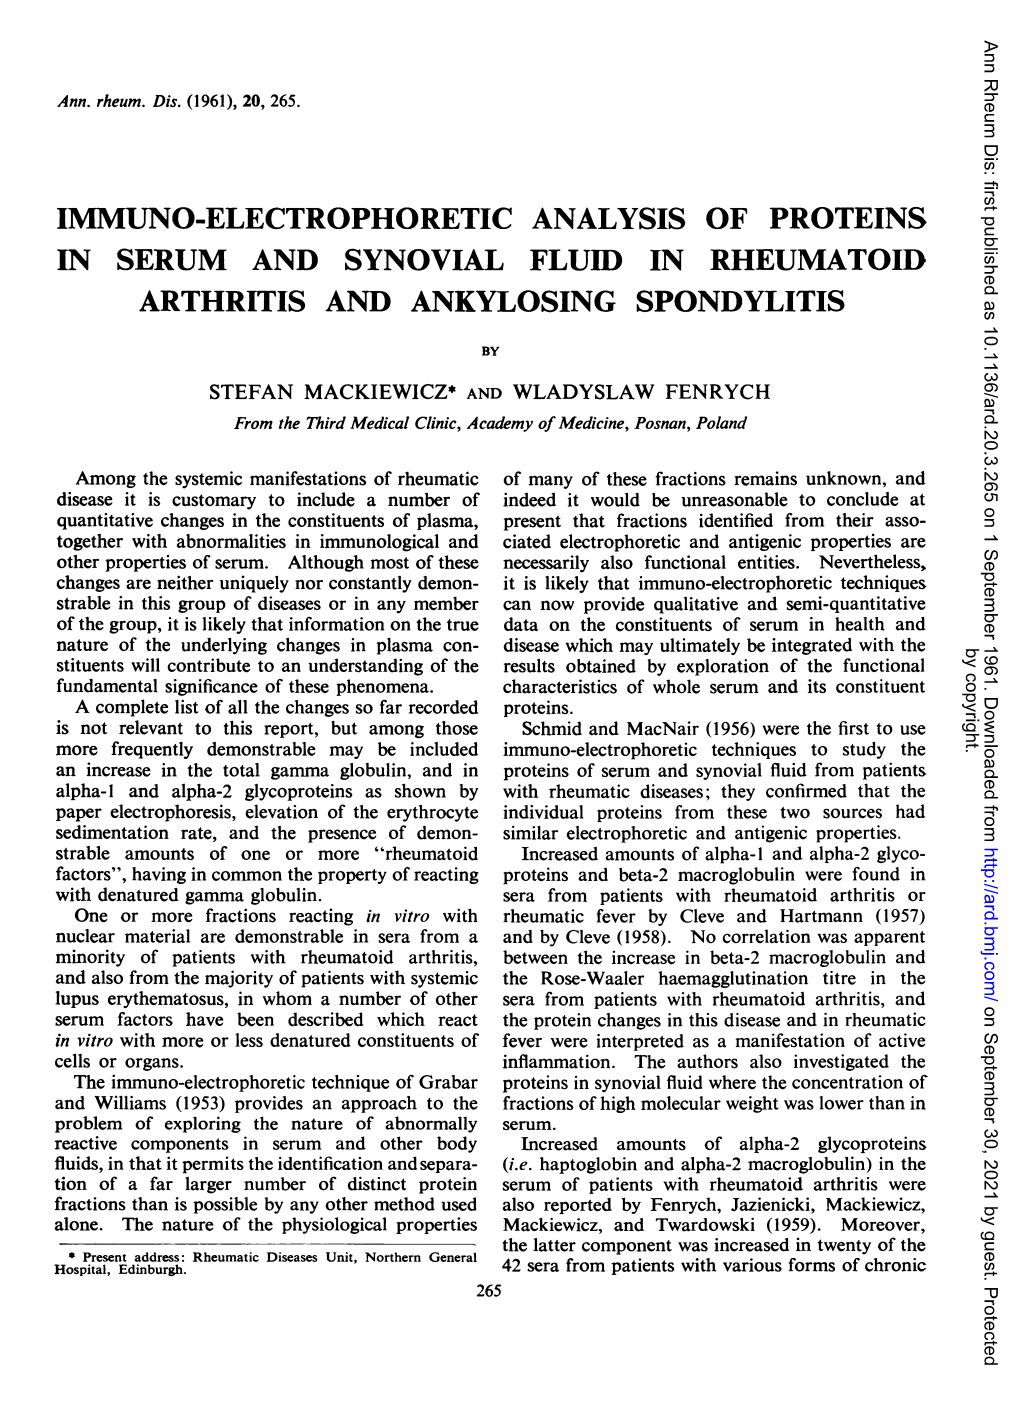 Immuno-Electrophoretic Analysis of Proteins in Serum and Synovial Fluid in Rheumatoid Arthritis and Ankylosing Spondylitis